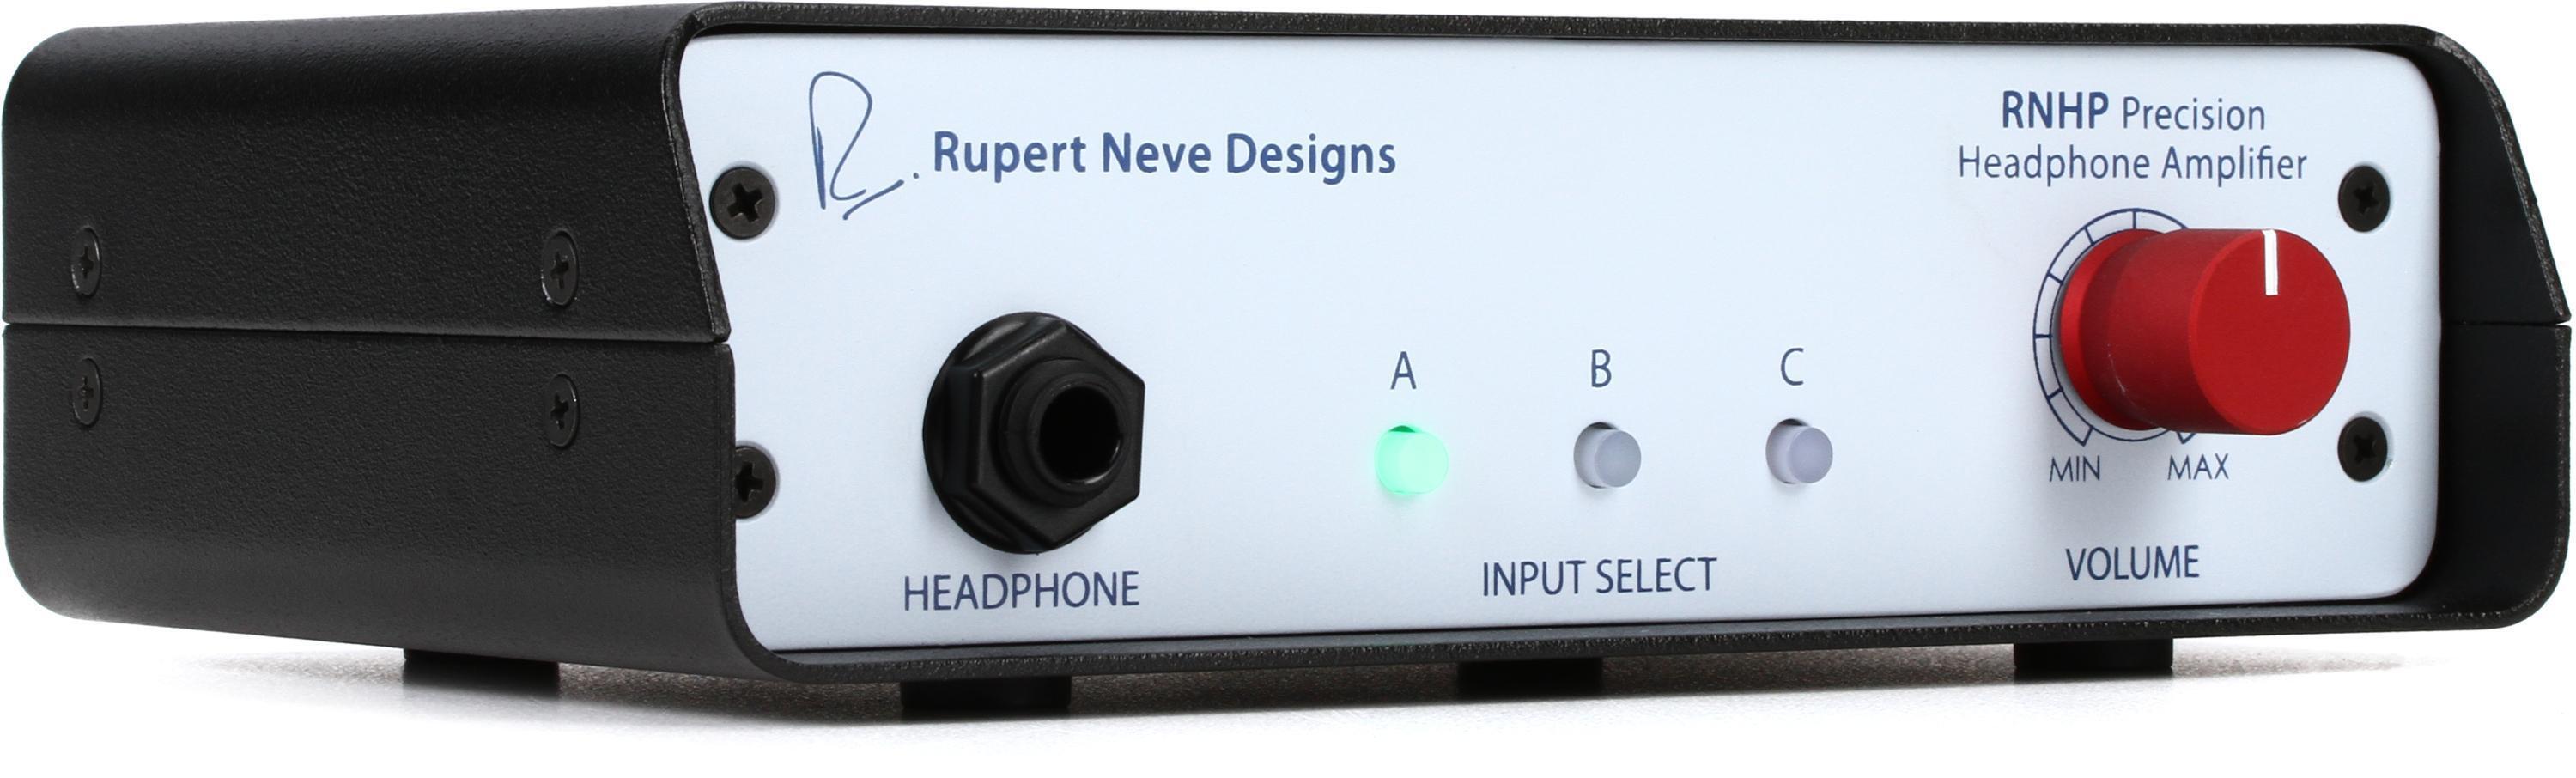 Bundled Item: Rupert Neve Designs RNHP 1-channel Precision Headphone Amplifier